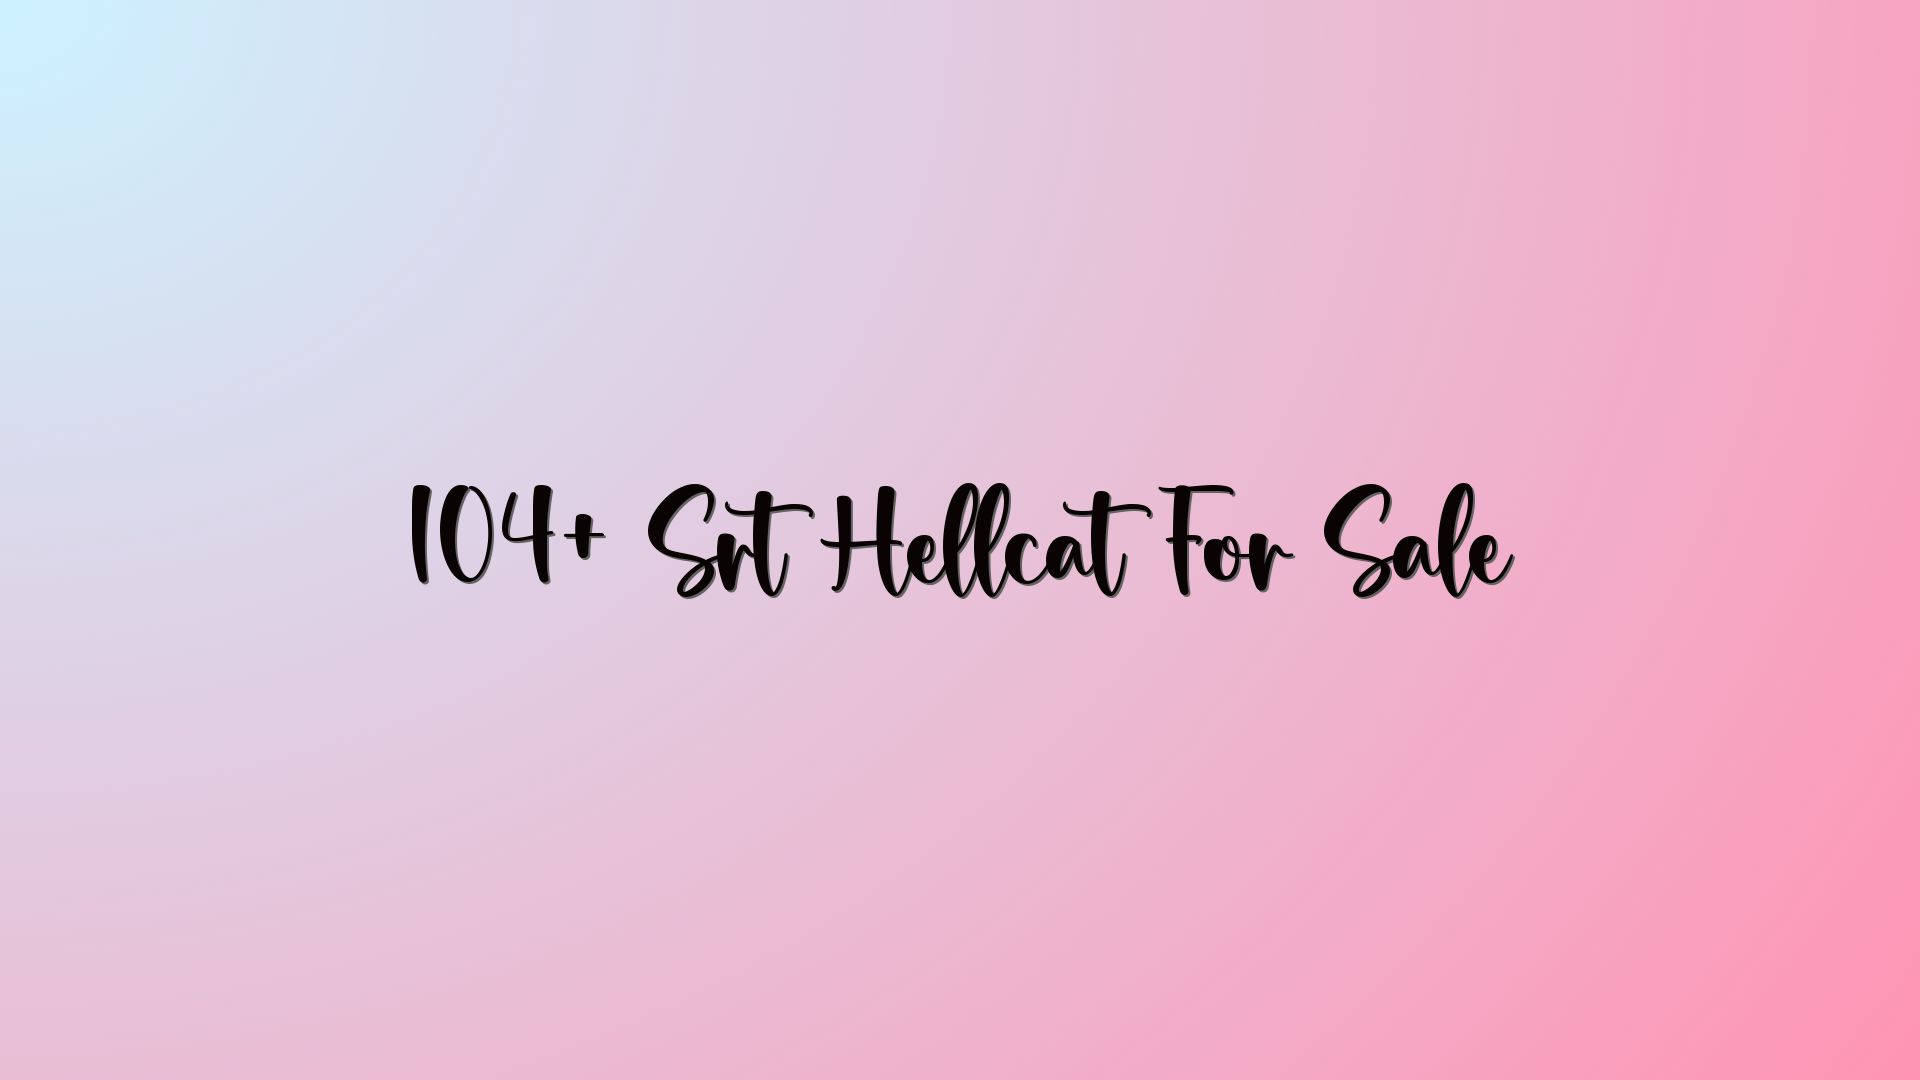 104+ Srt Hellcat For Sale